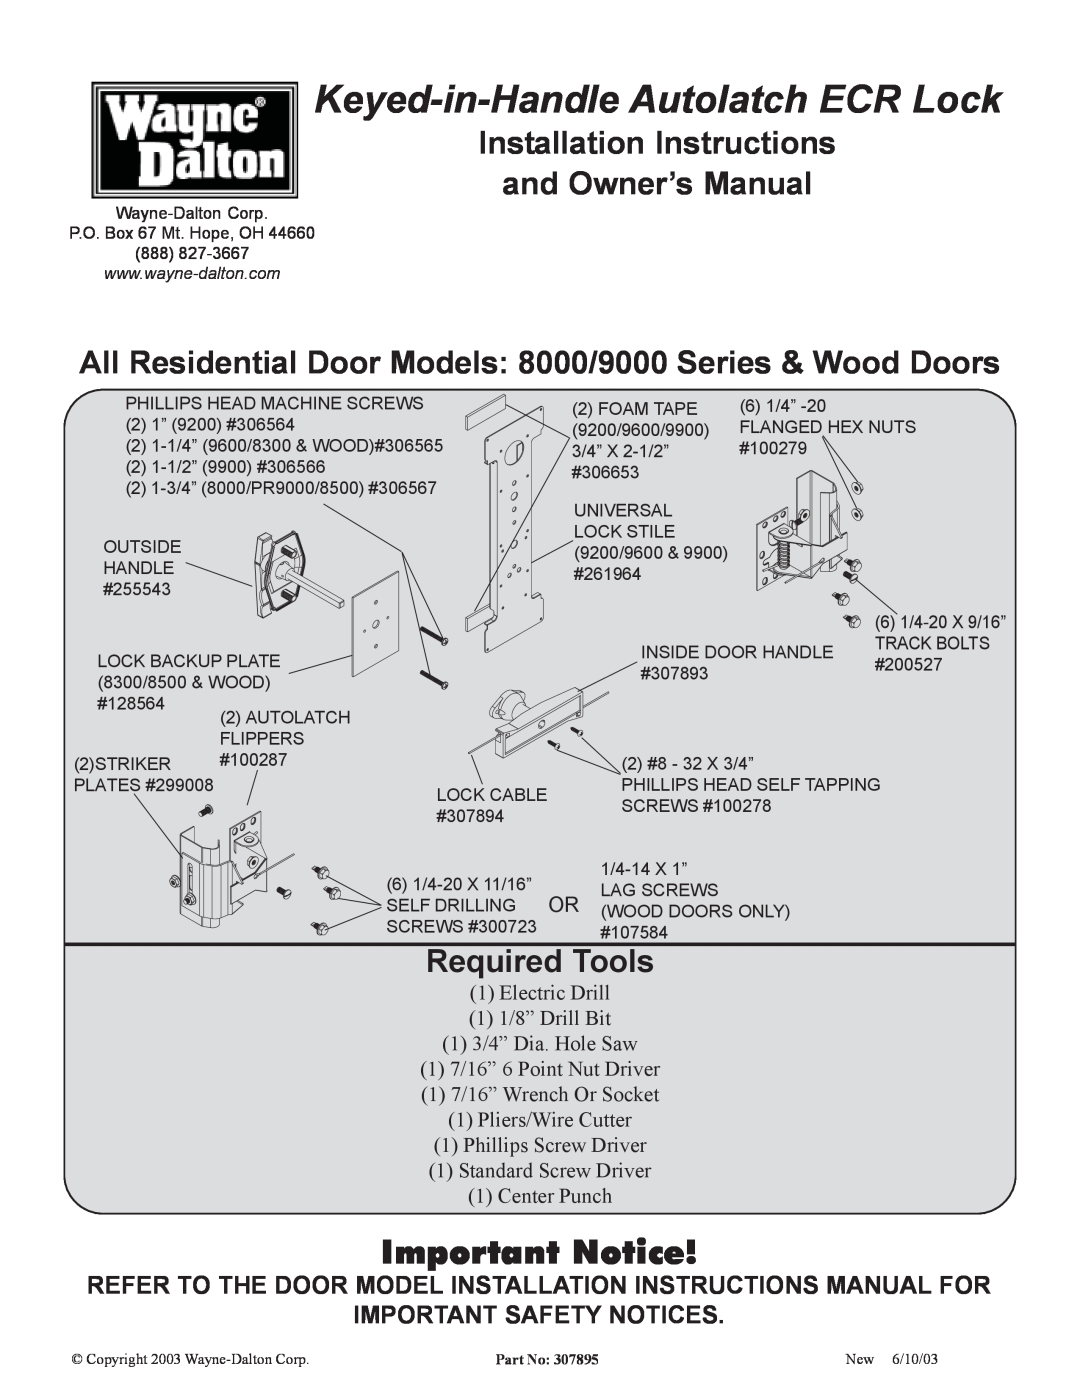 Wayne-Dalton manual 8000, 8100, 8200 Carga de viento, TorqueMaster Plus - Resorte sencillo o doble 